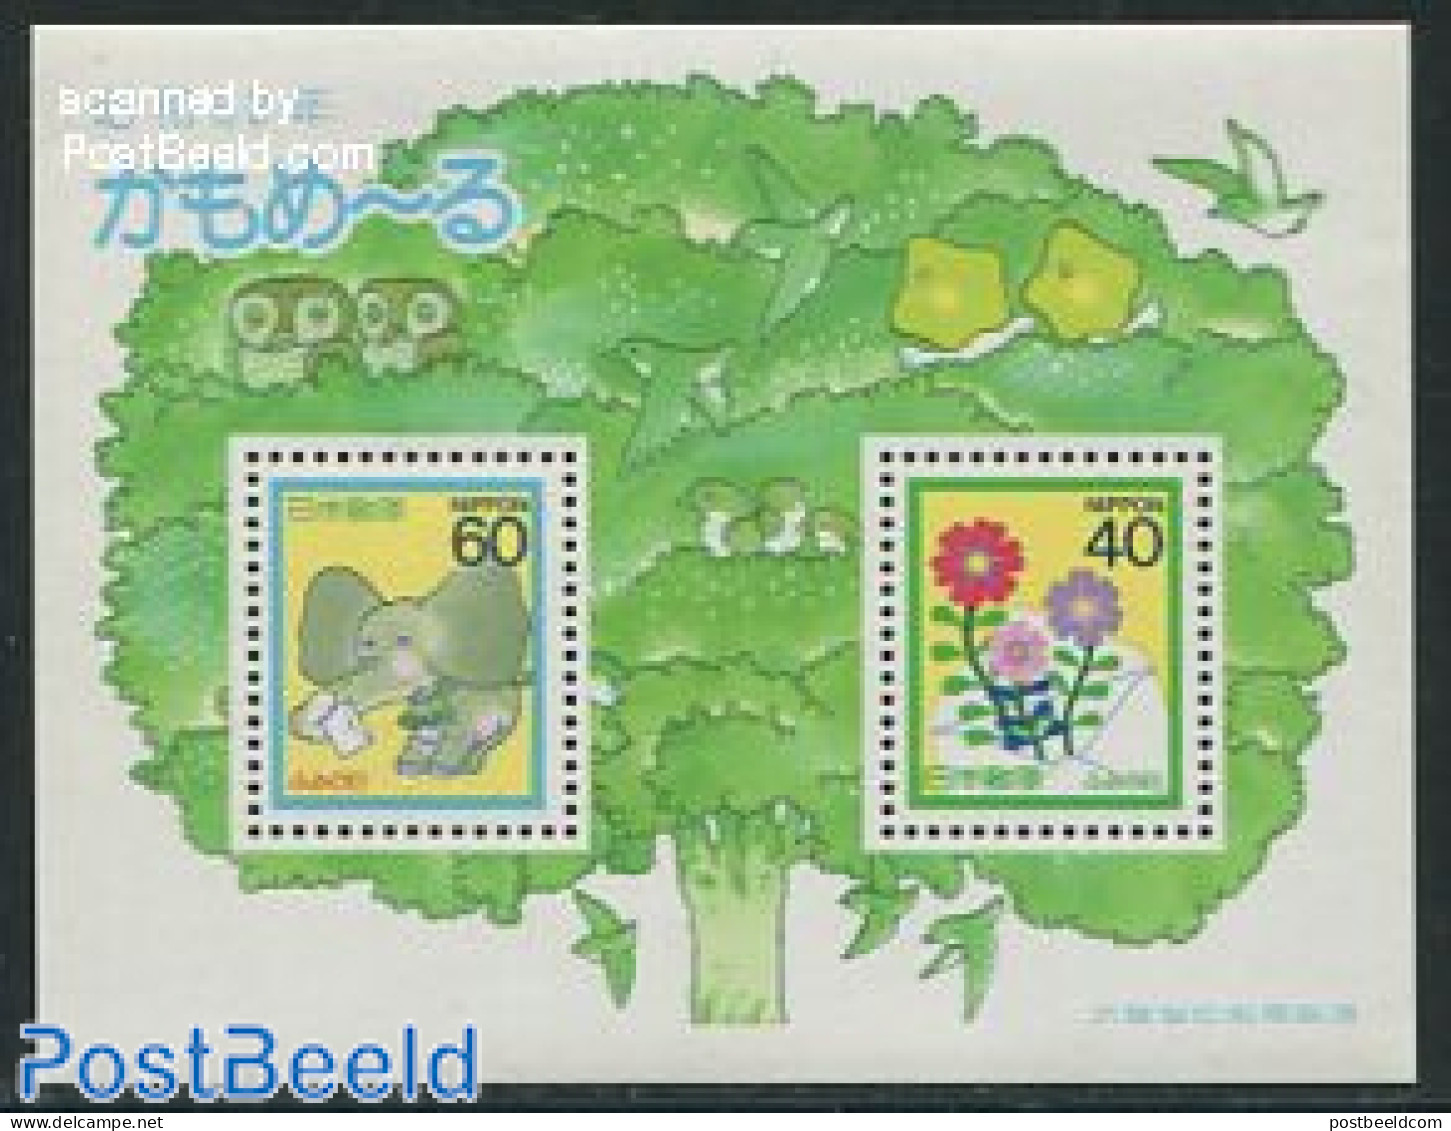 Japan 1987 Letter Writing Week S/s, Mint NH, Nature - Elephants - Flowers & Plants - Nuevos